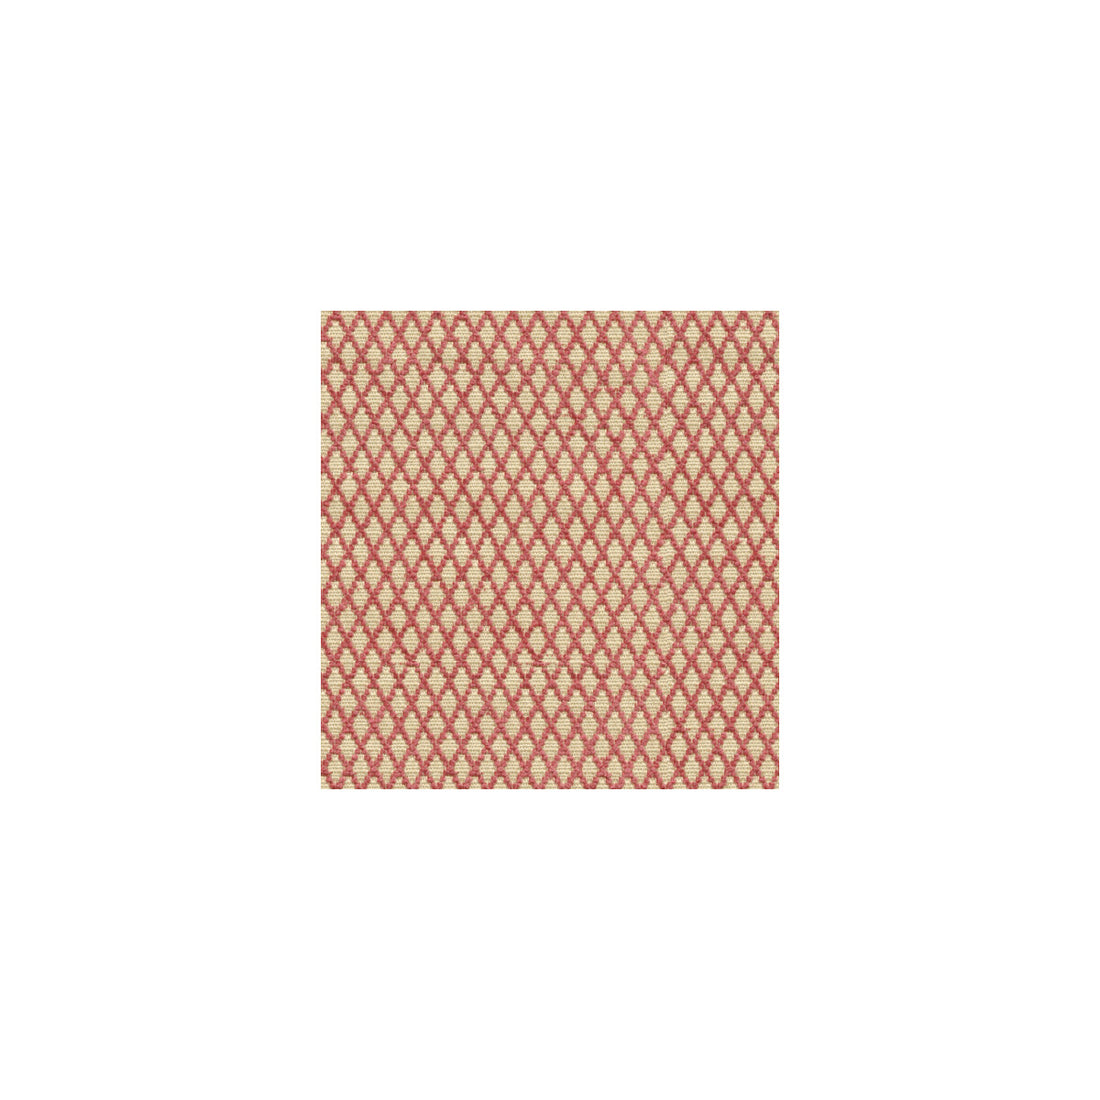 Kravet Design fabric in 31373-19 color - pattern 31373.19.0 - by Kravet Design in the Gis collection